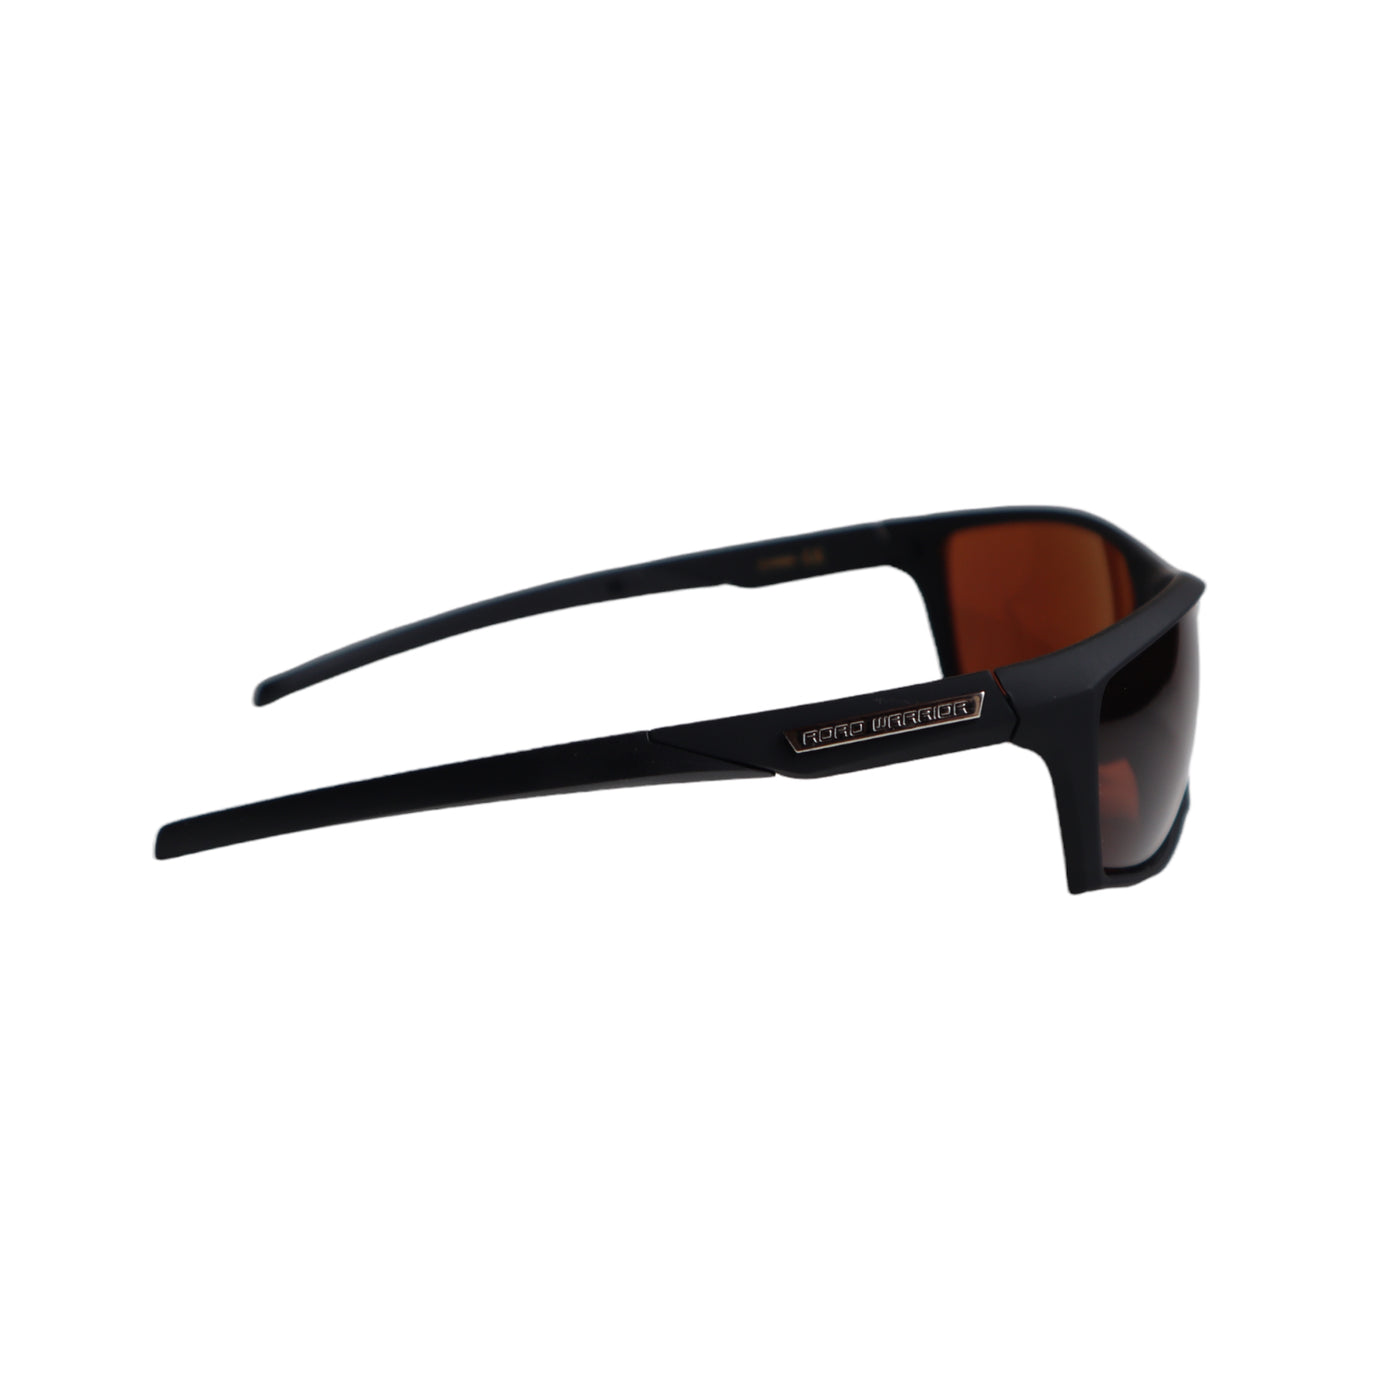 ROAD WARRIOR Anti-Glare Sunglasses BLACK Matte Frame High Definition Brown Lens